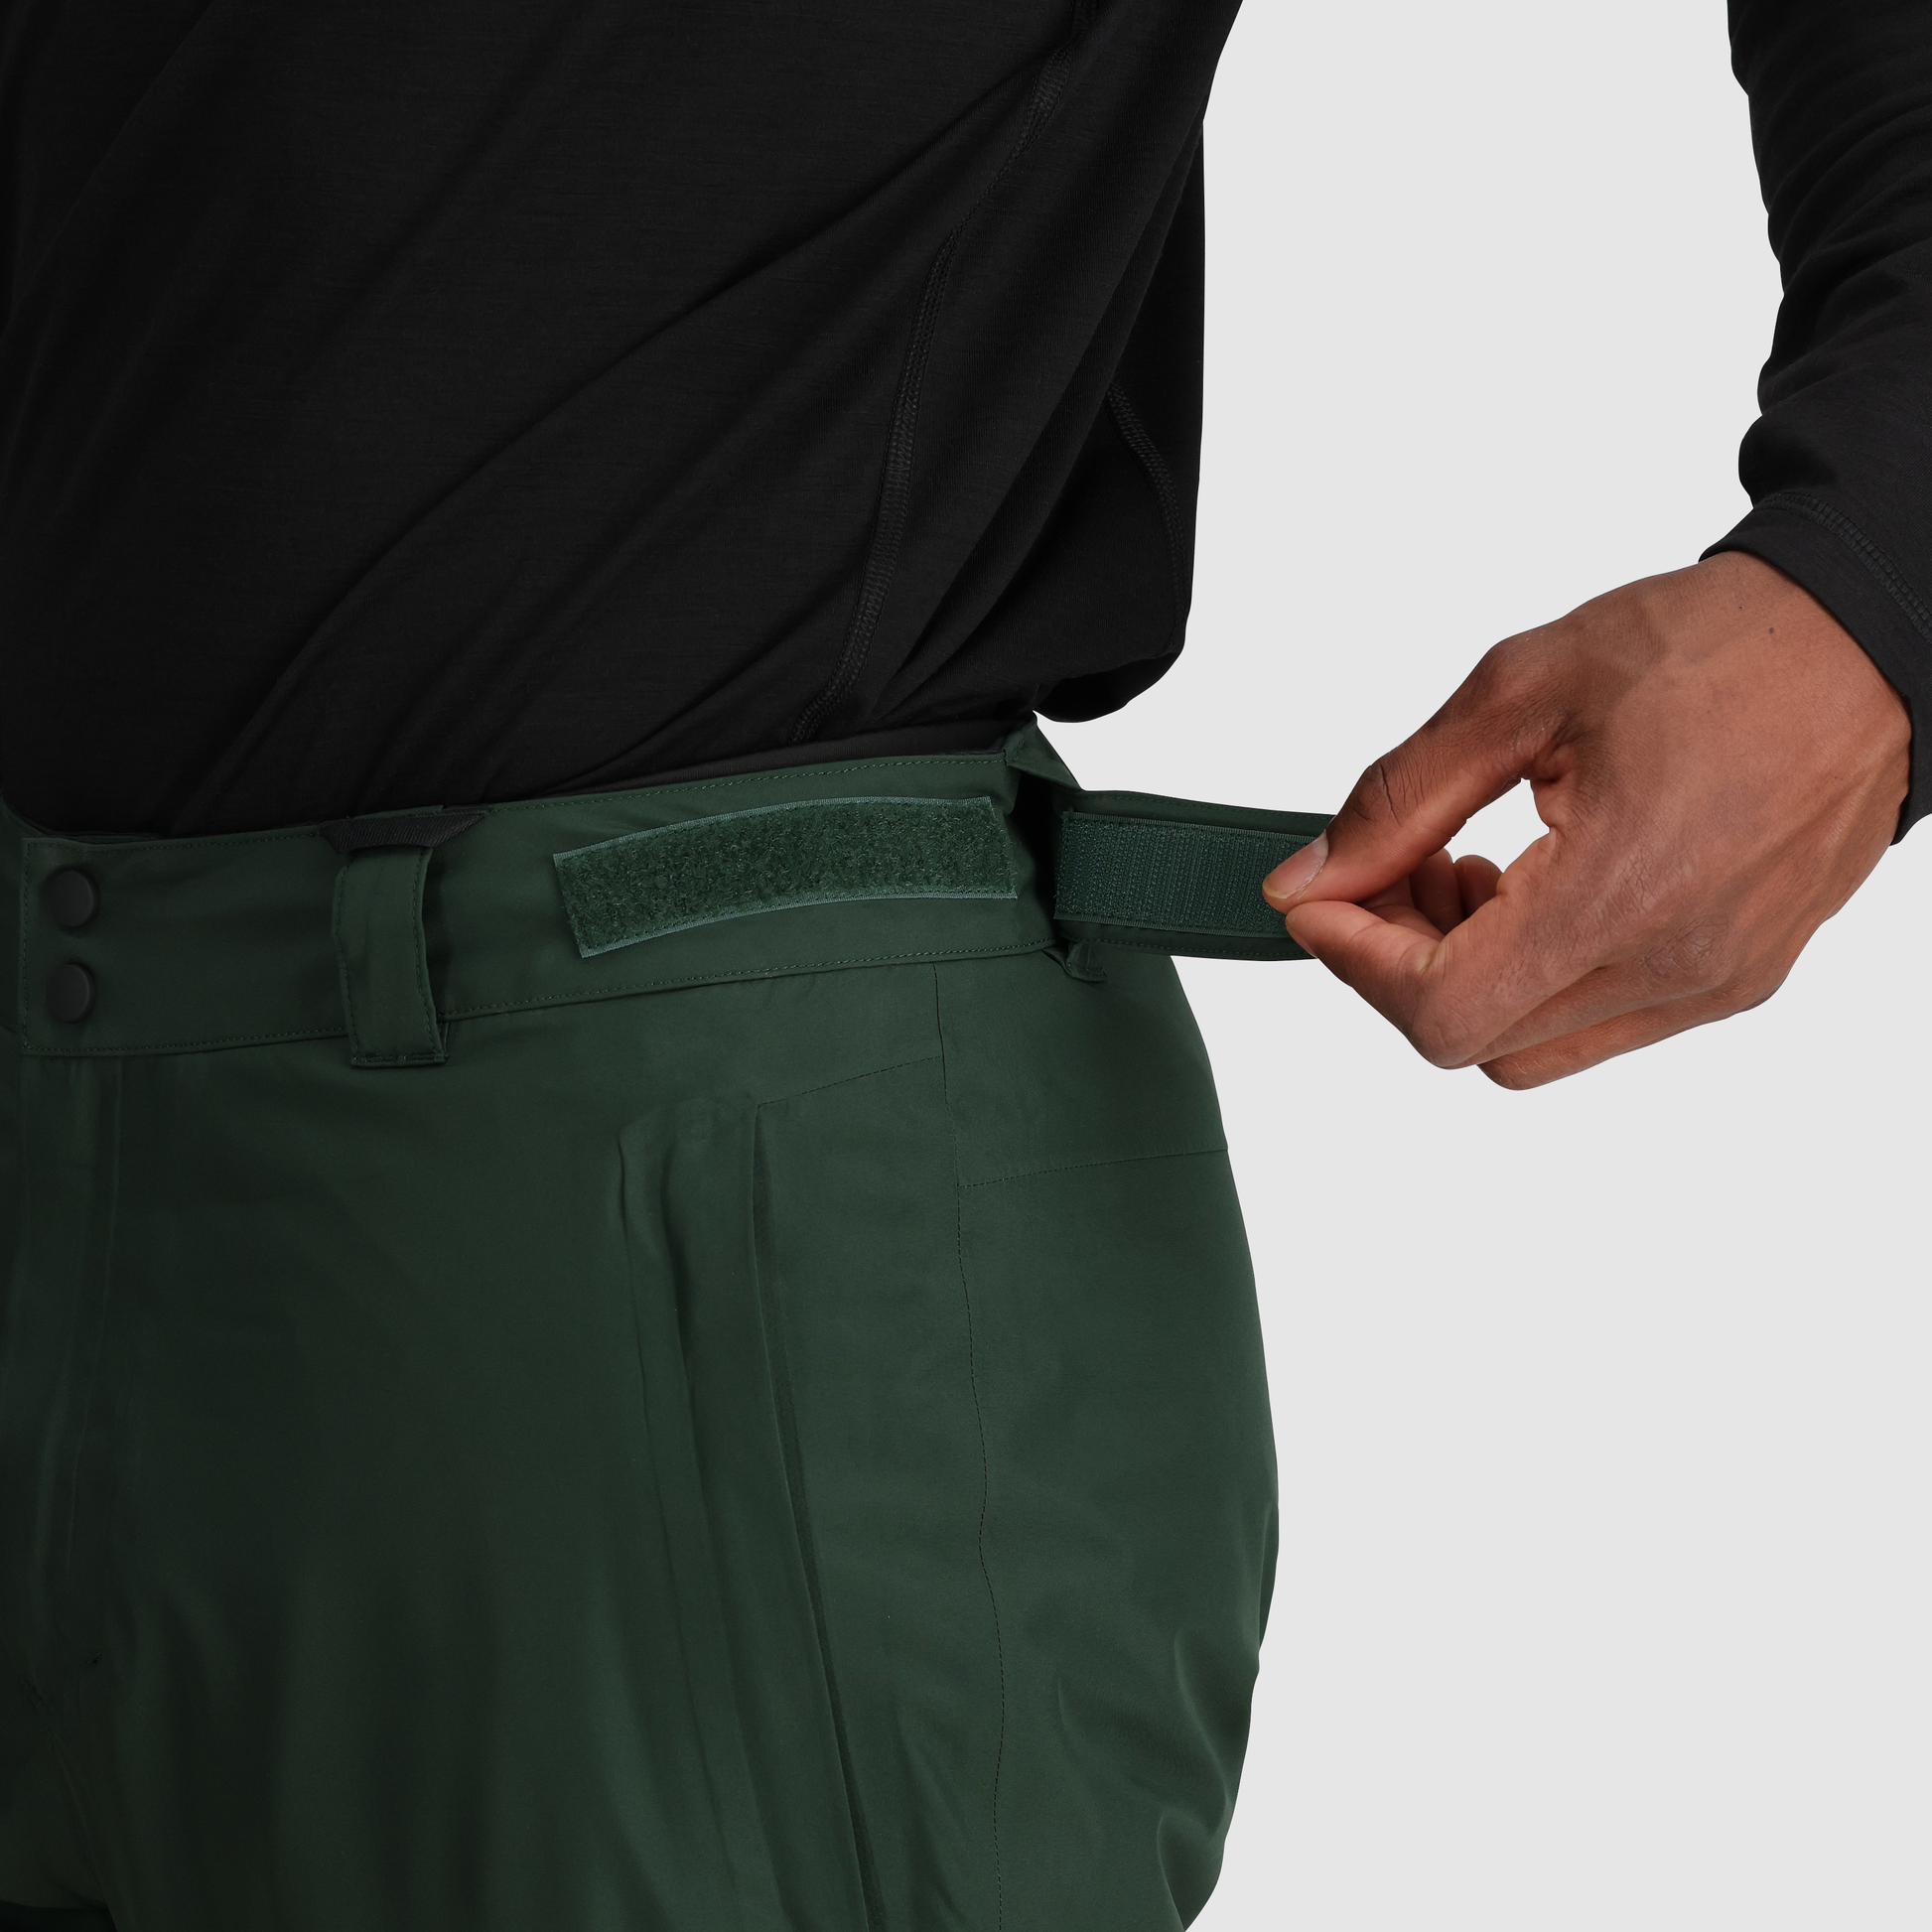 B1 ::Velcro Waist Adjustment / Allows micro adjustments to waist as well as prevent zipper creep.